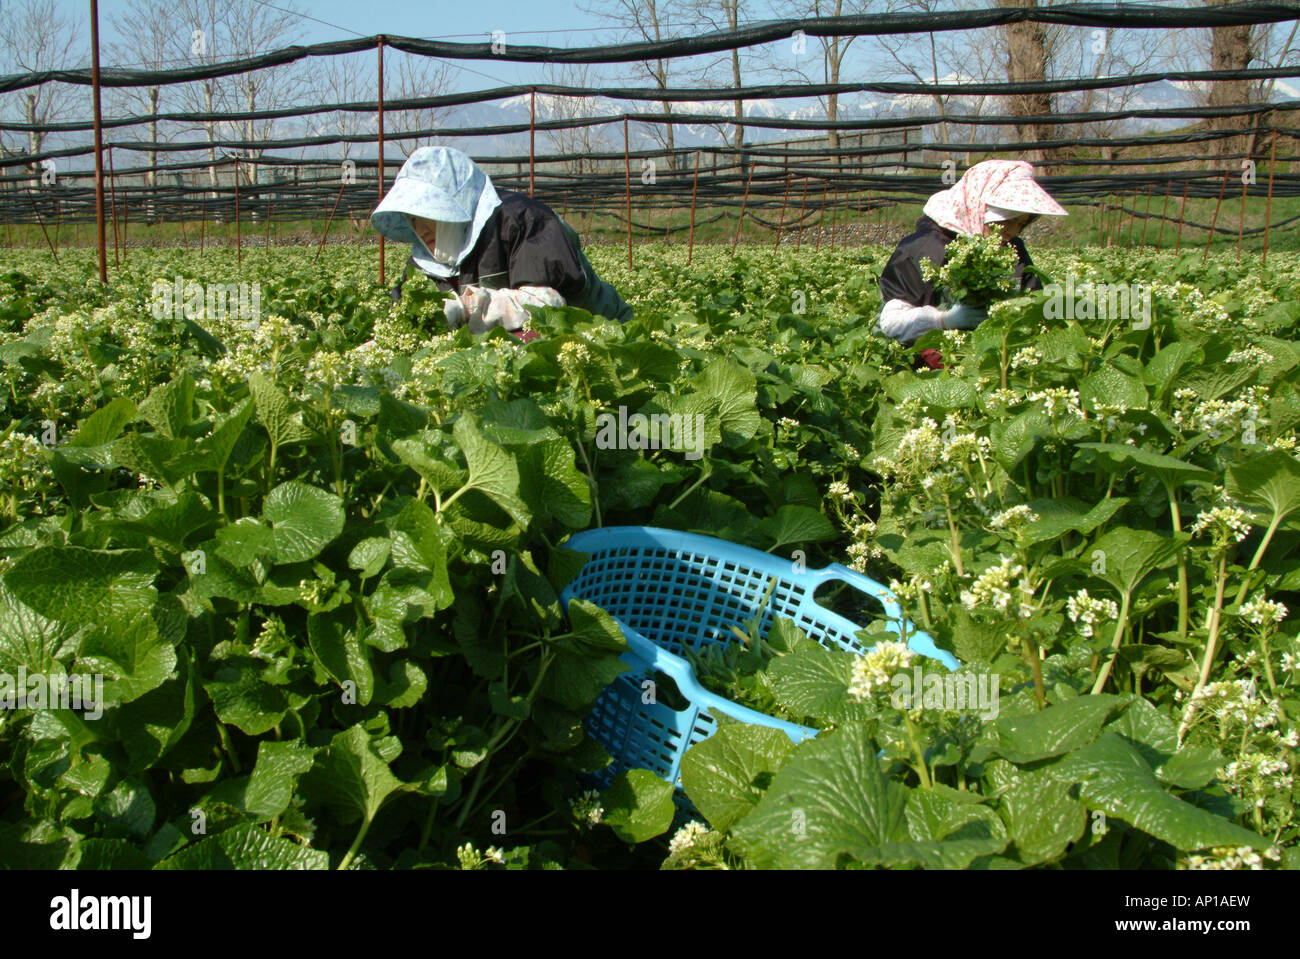 Female Pickers in a horseradish field, Daio Wasabi Farm, Matsumoto, Nagano-ken, Japan Stock Photo